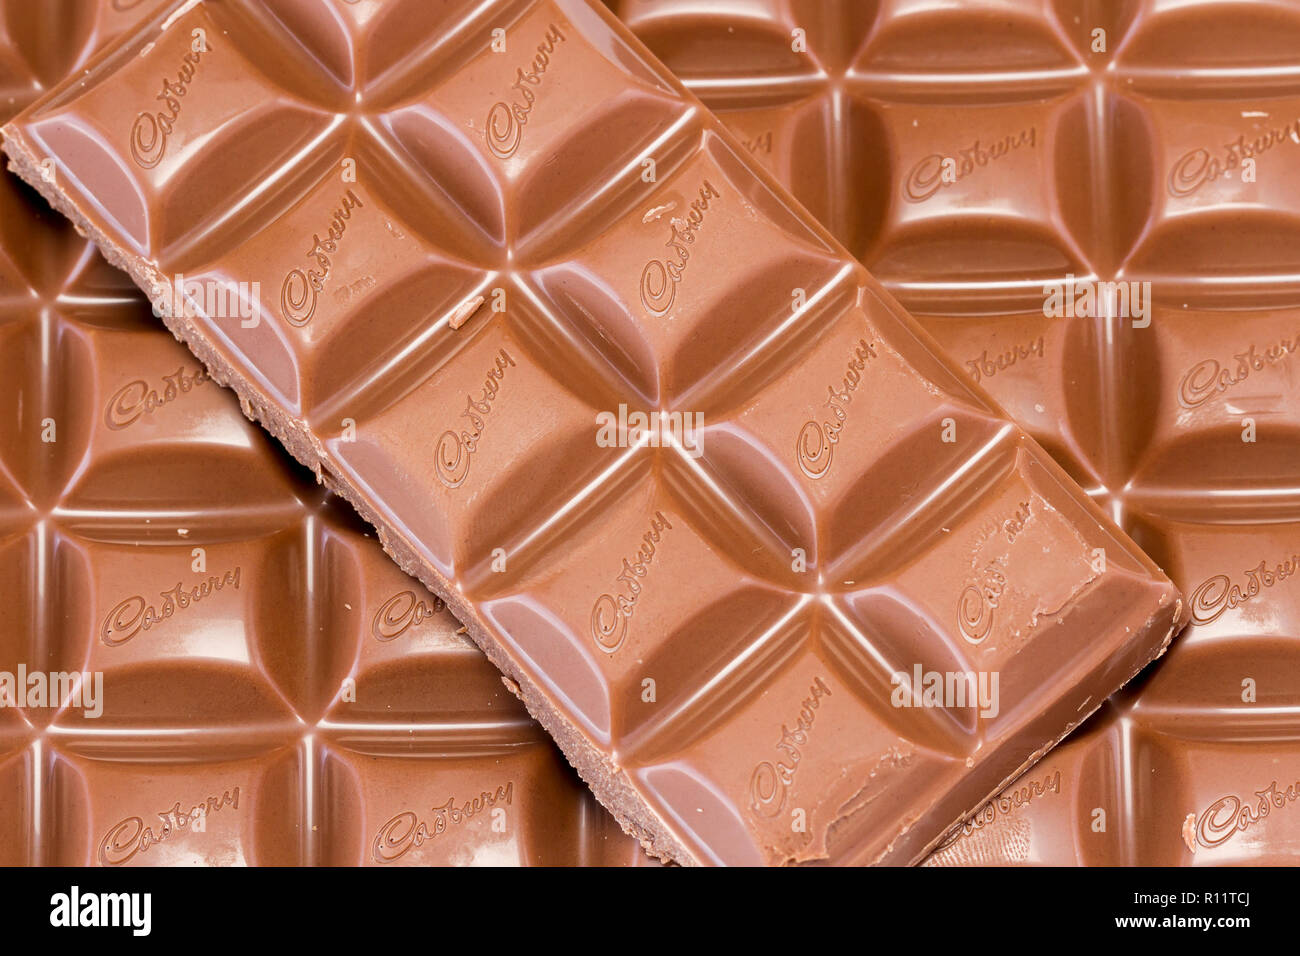 Cadbury Dairy Milk Chocolate bar libre Banque D'Images